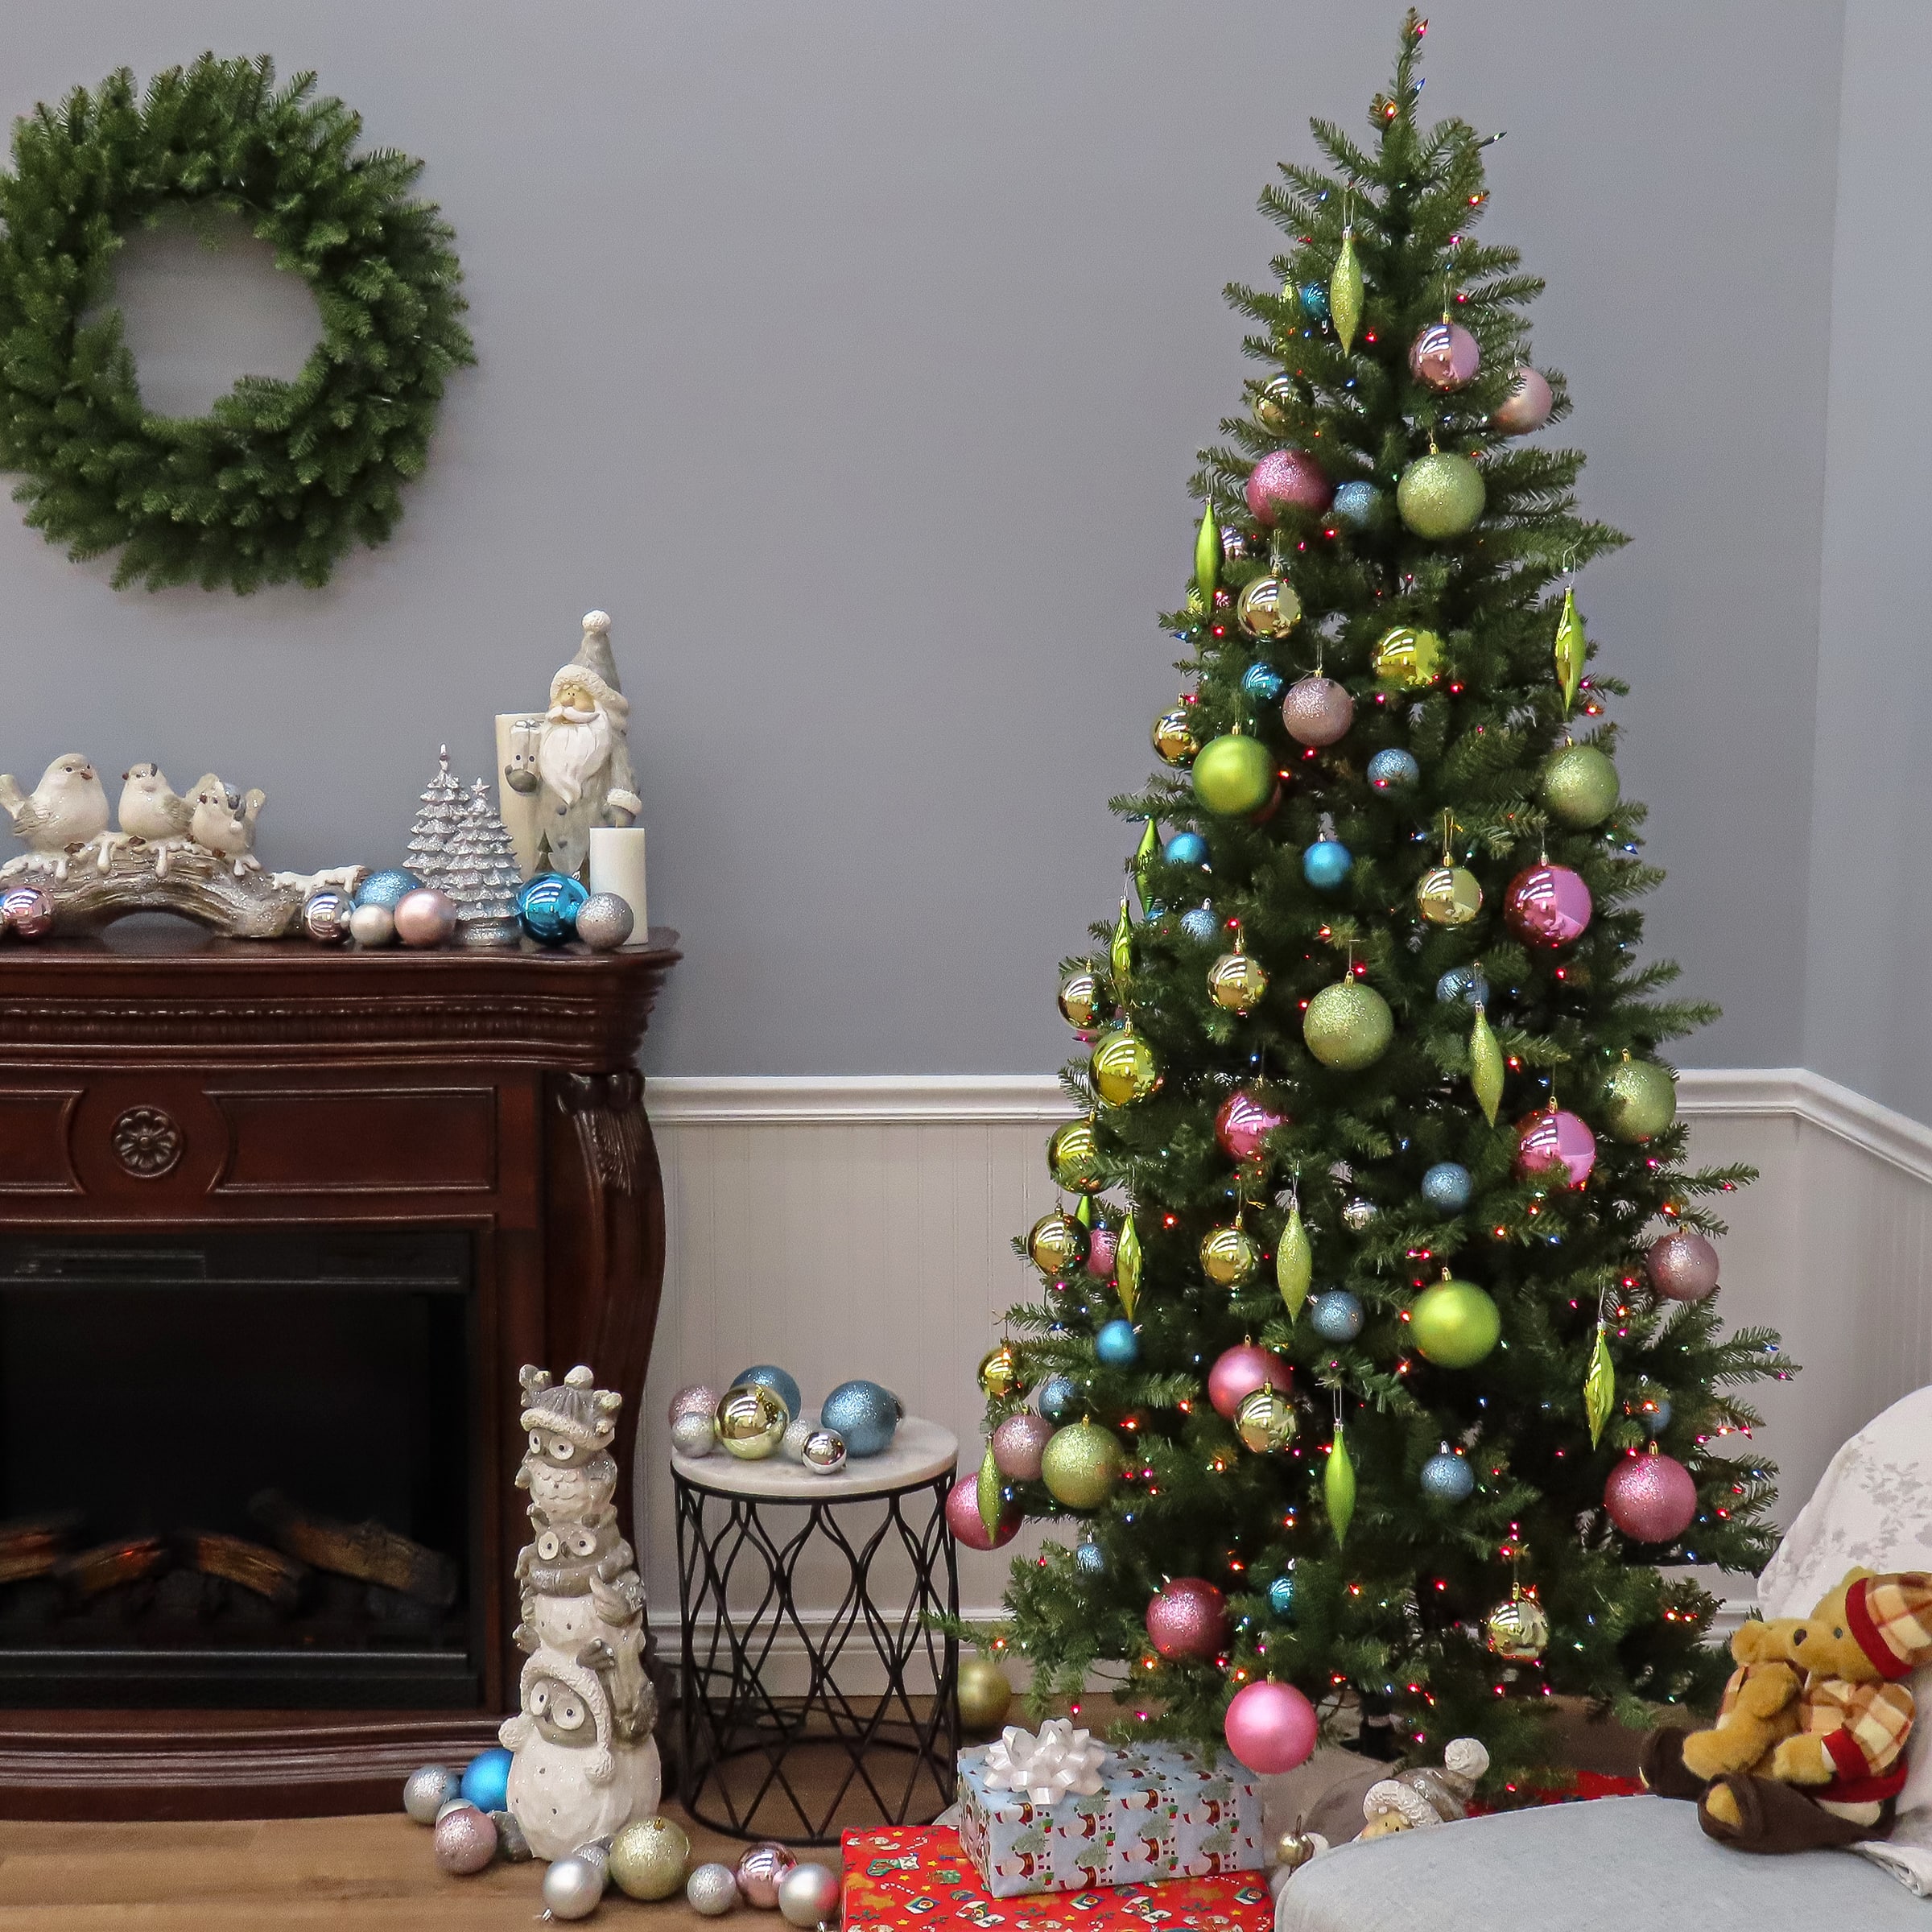 6.5 ft. Pre-Lit Dunhill&#xAE; Fir Slim Artificial Christmas Tree, Clear Lights